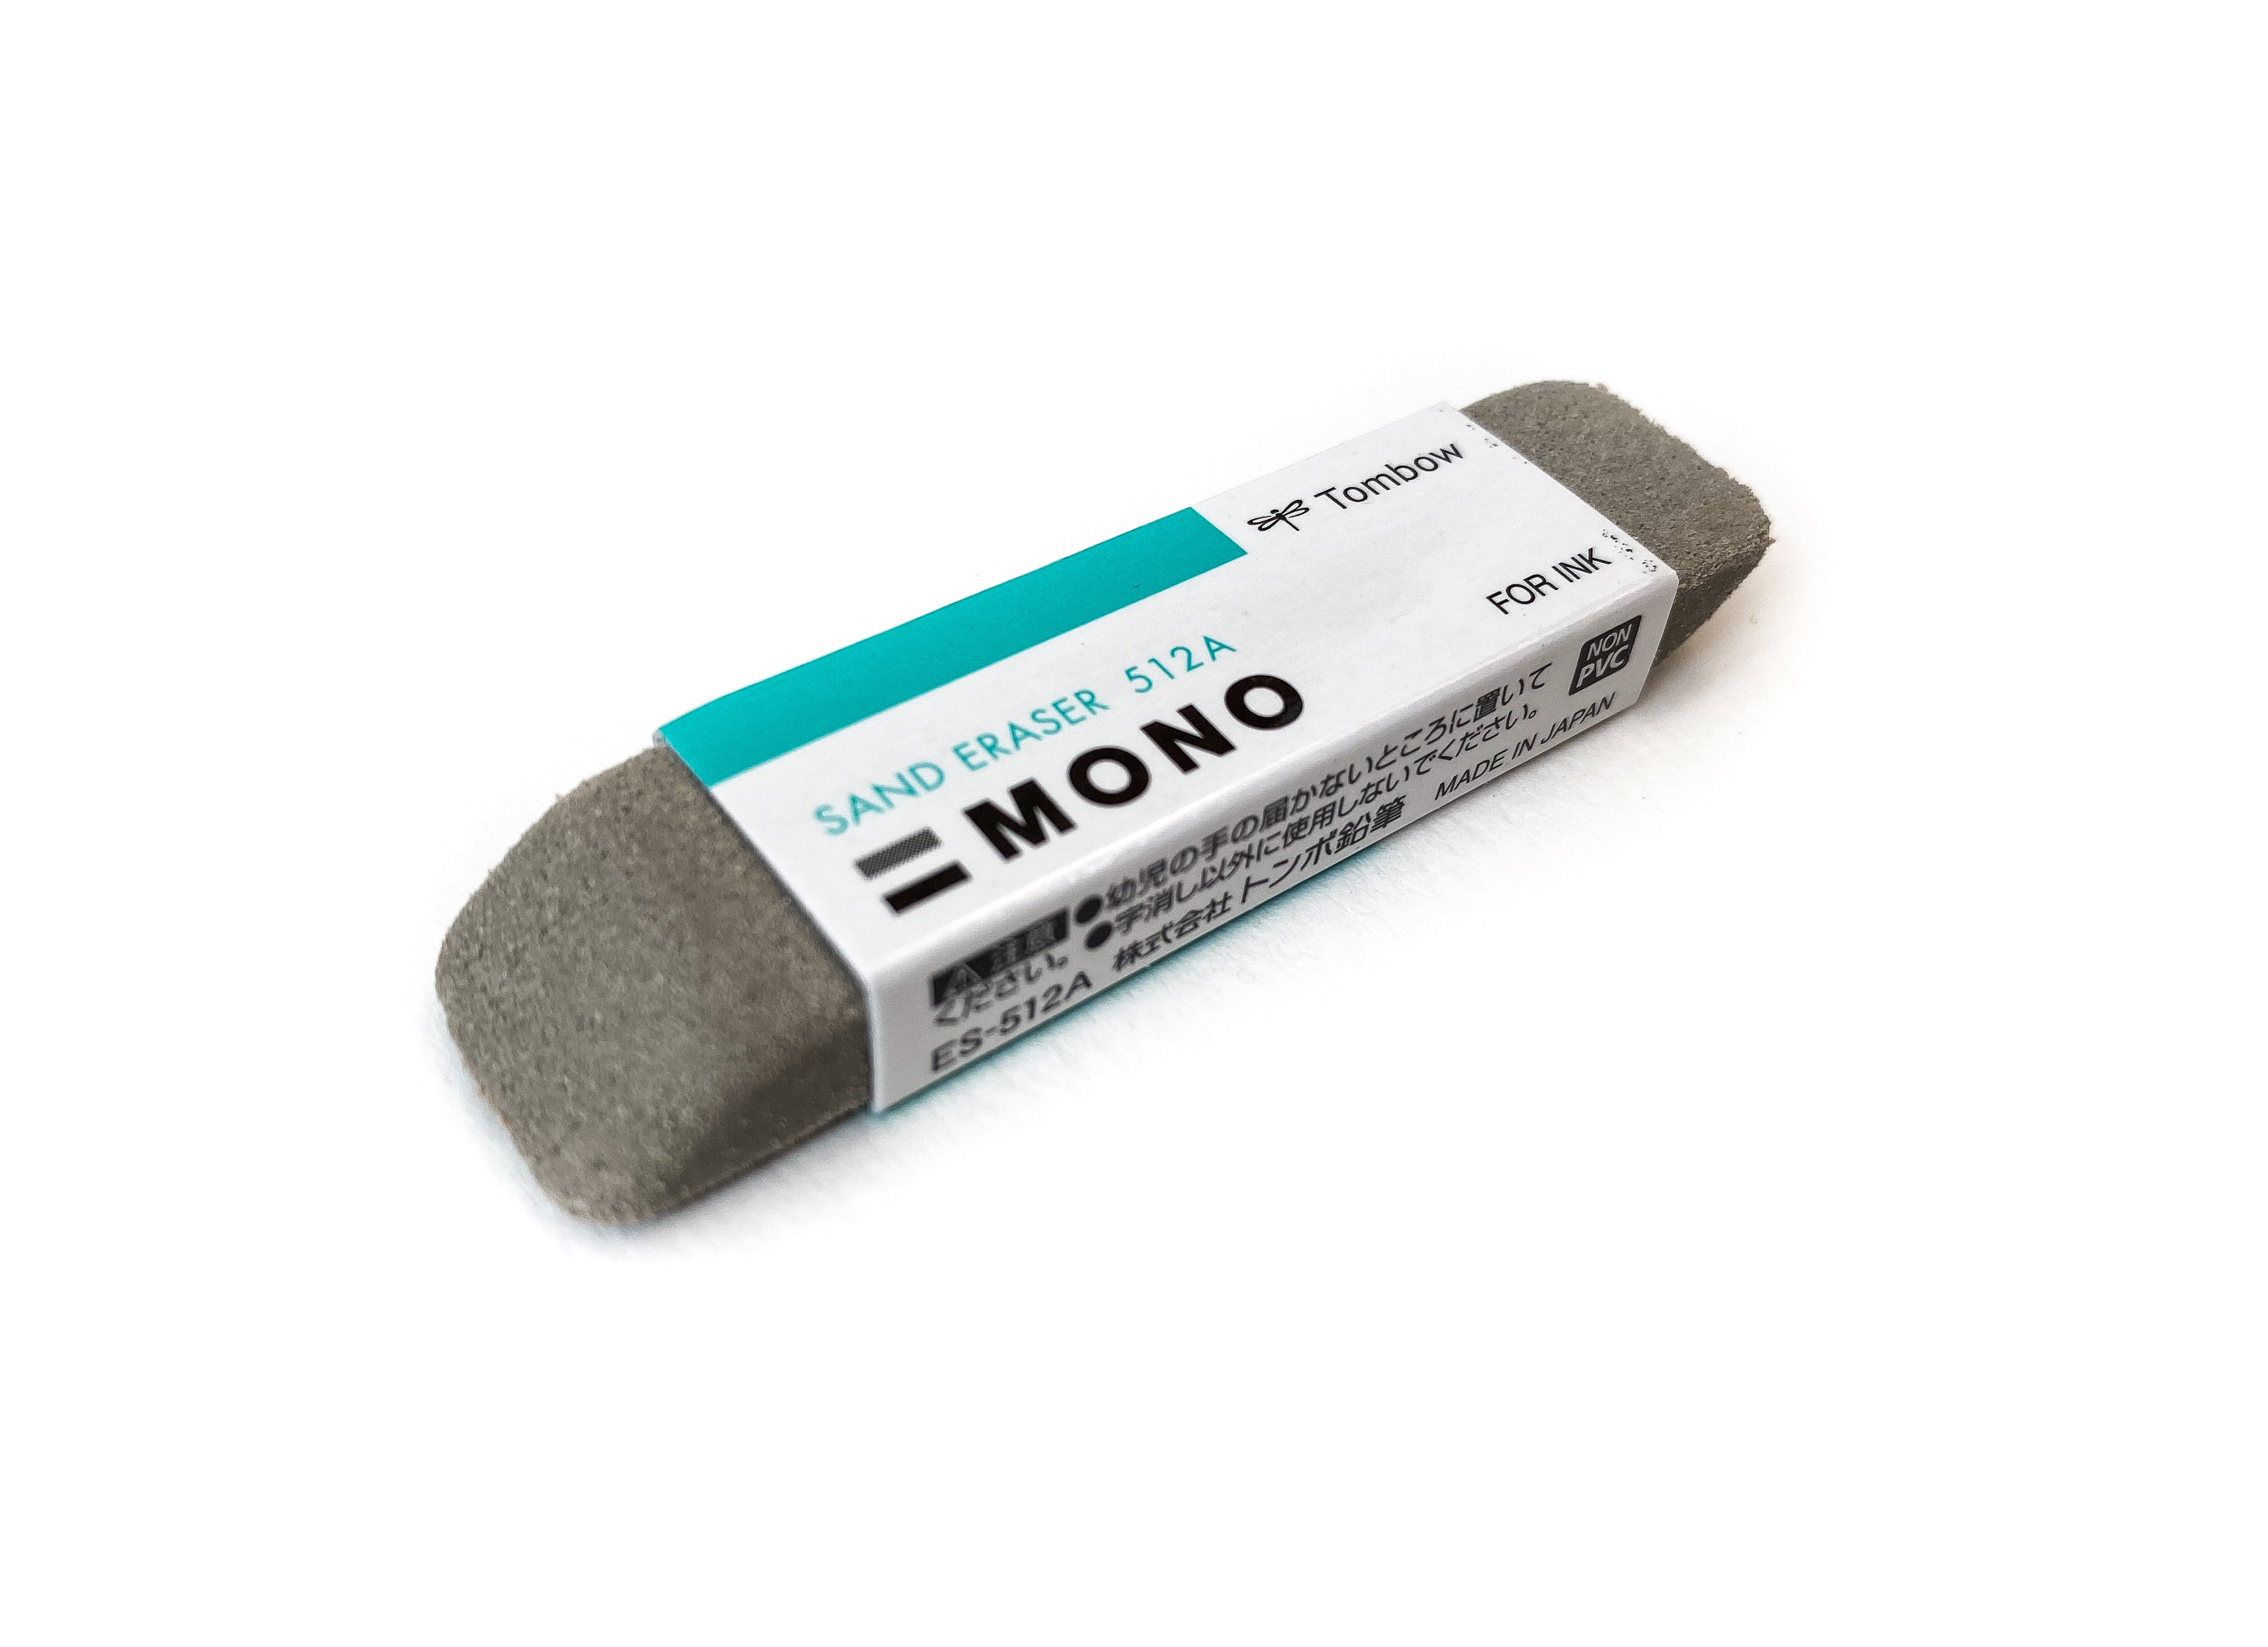 Mono Sand Eraser — The Aesthetic Union